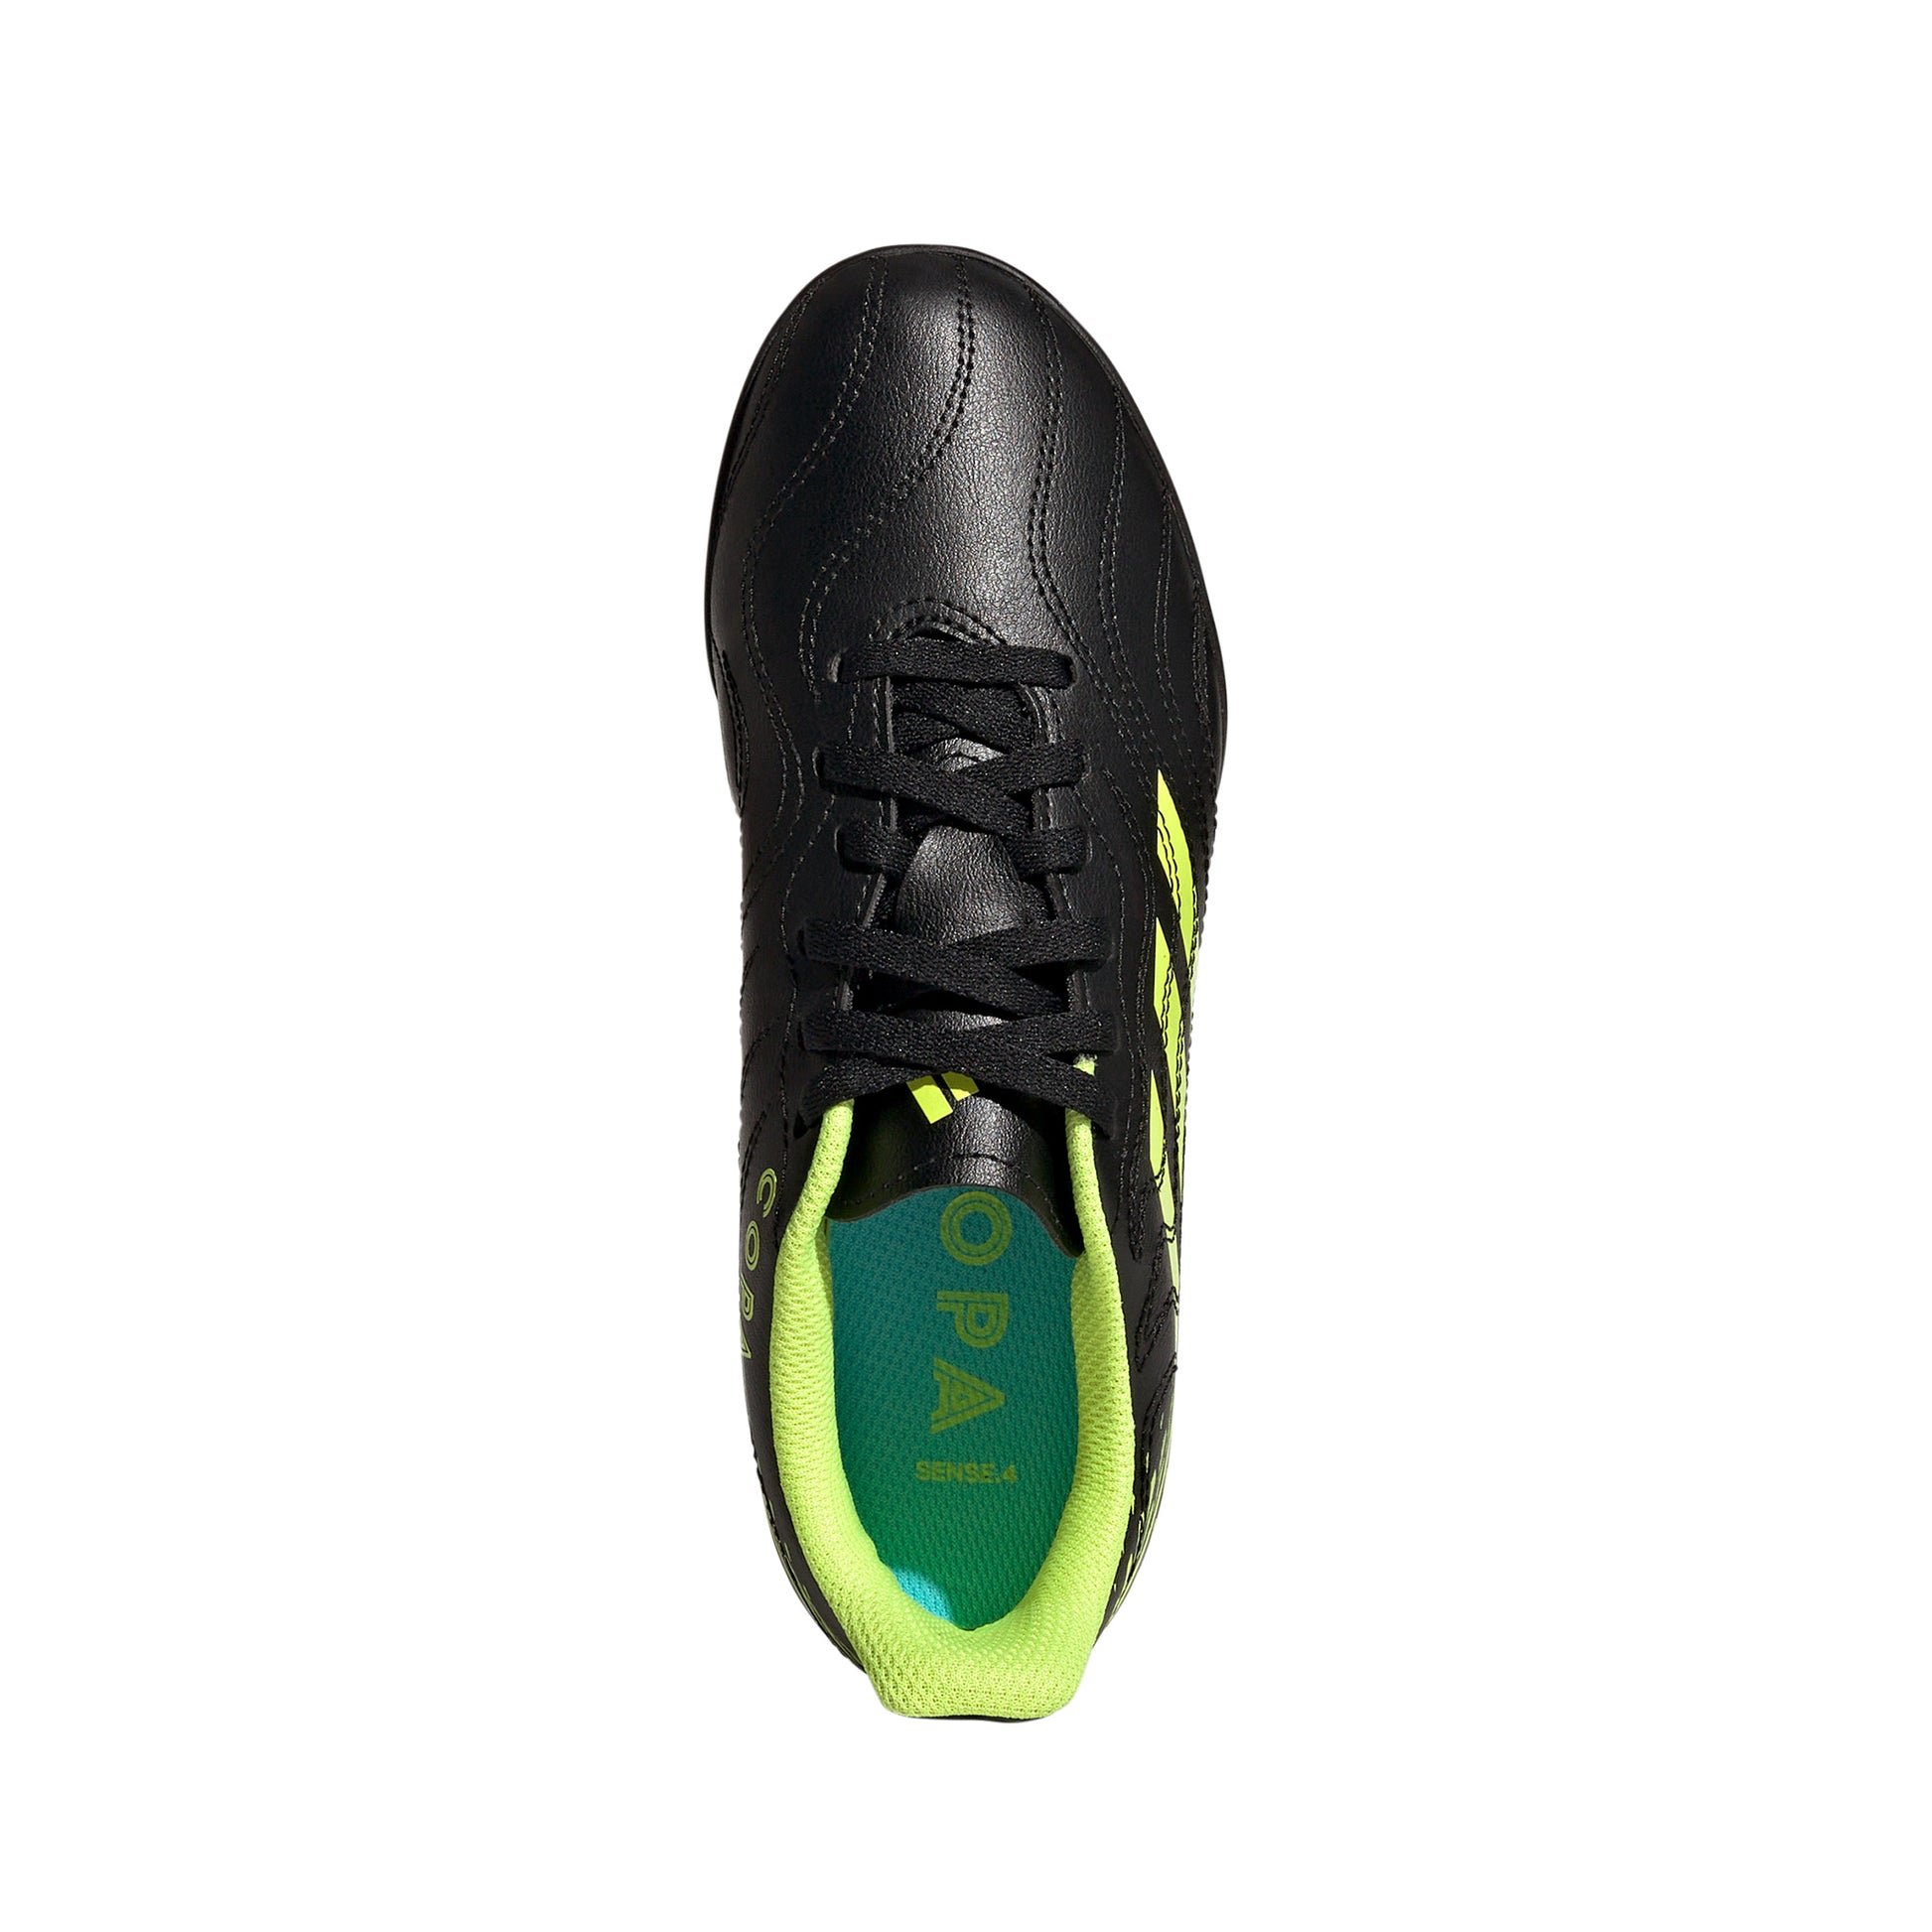 Copa Sense.4 Turf Soccer Shoes | EvangelistaSports.com | Canada's Premiere Soccer Store